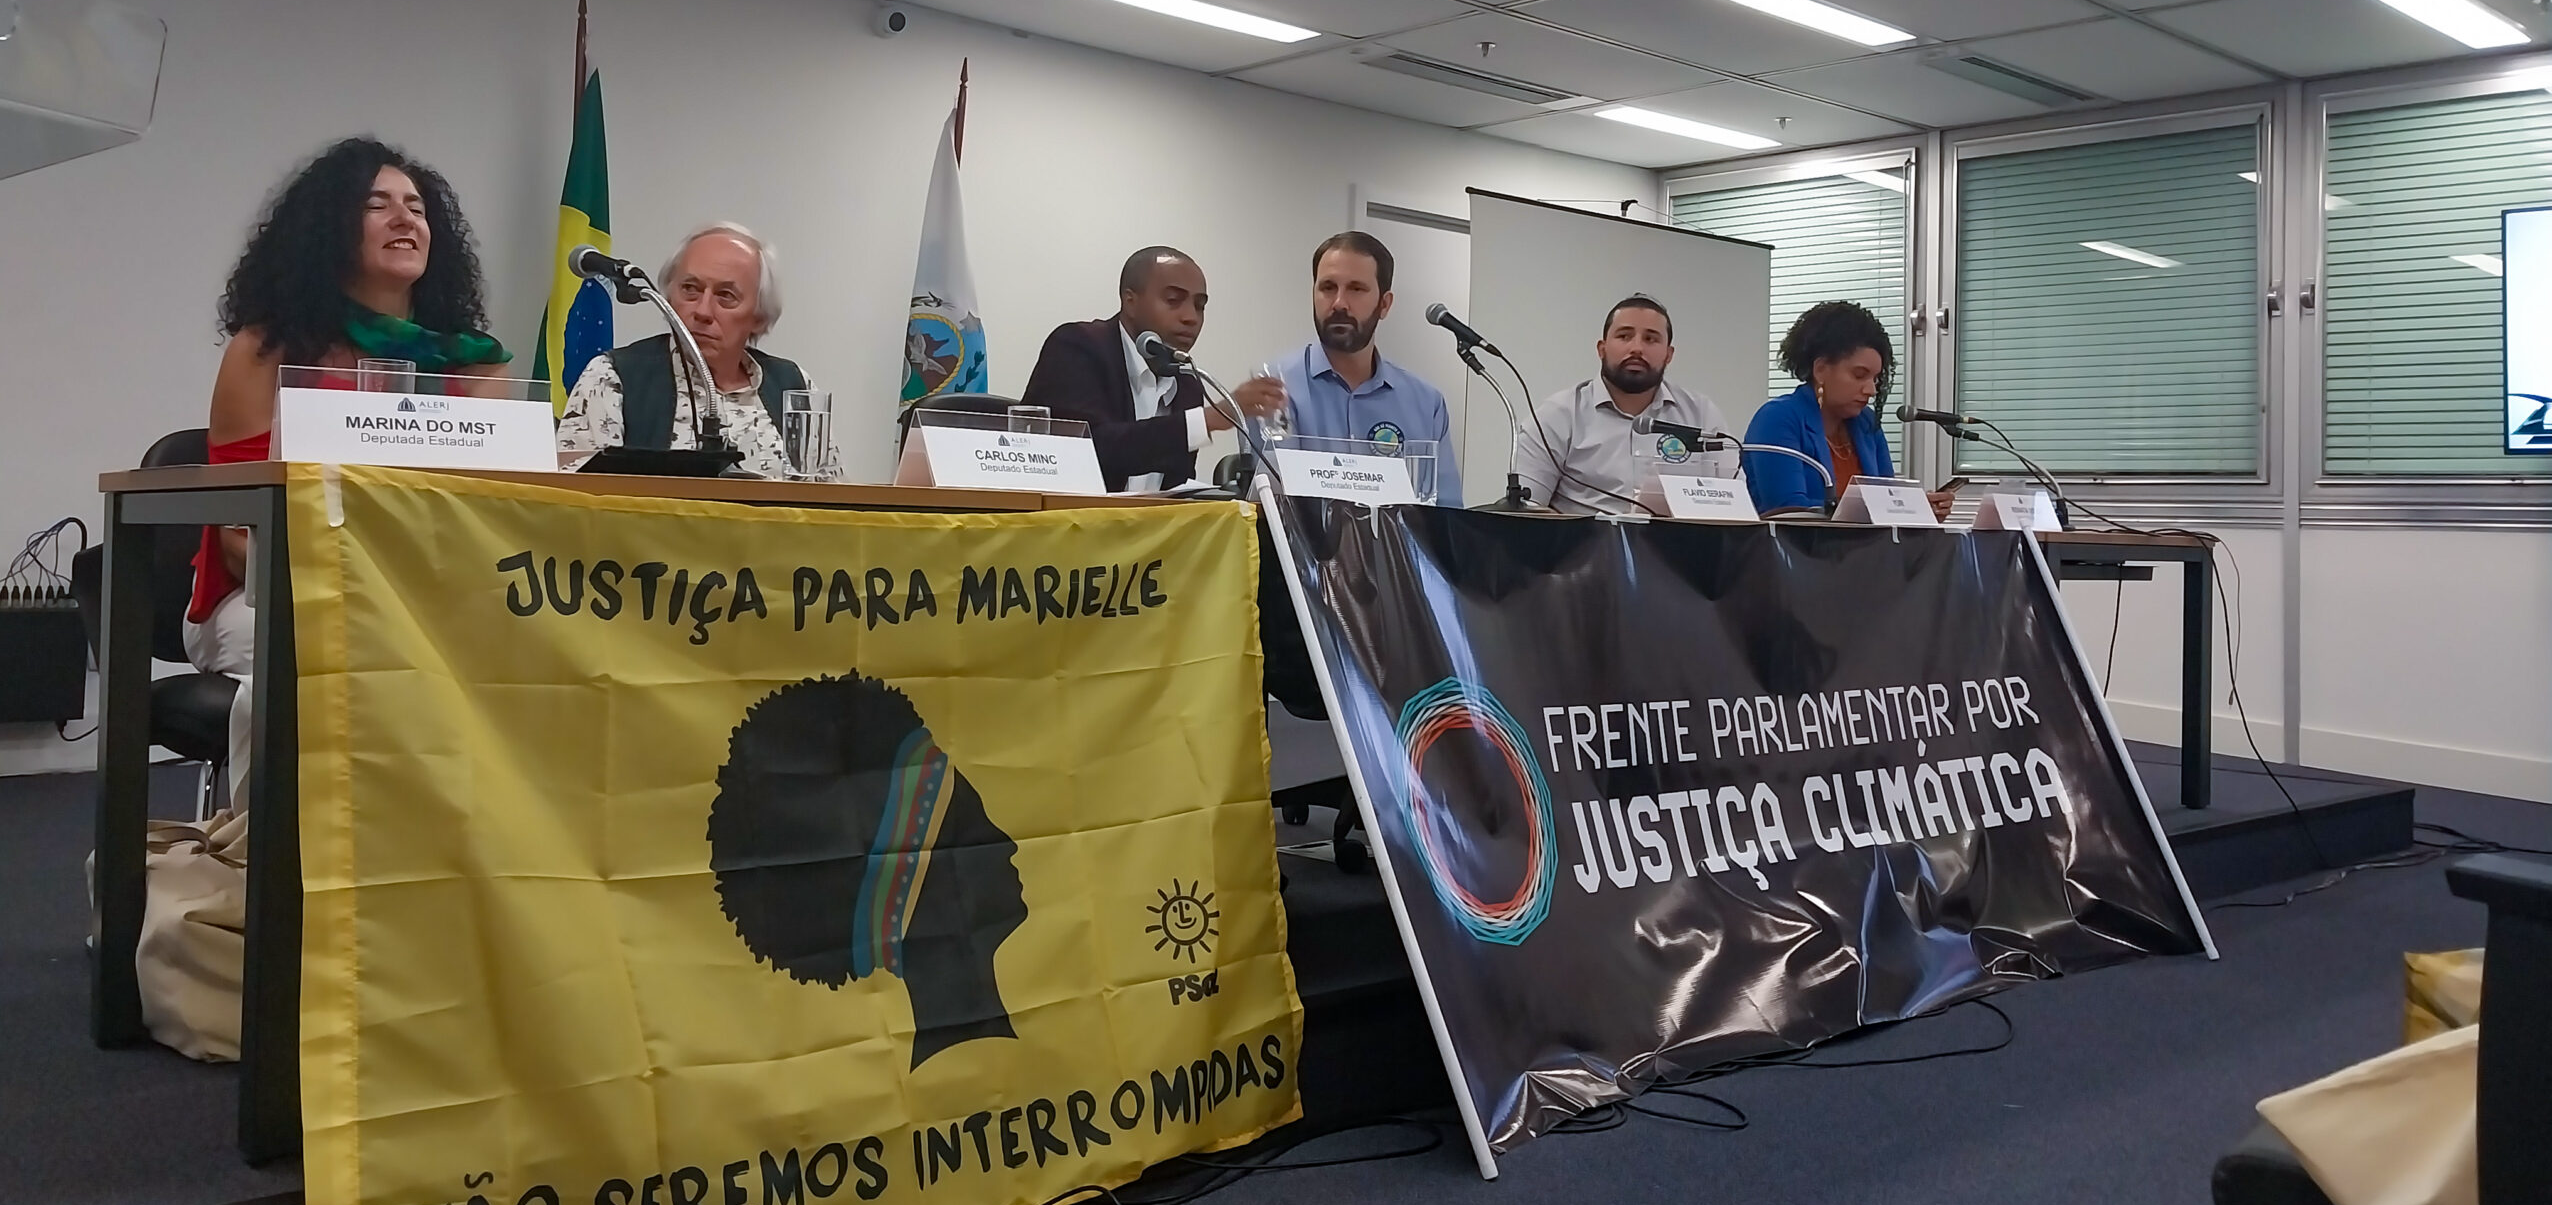 Launch of the Parliamentary Front for Climate Justice. From left to right: Marina do MST, Carlos Minc, Professor Josemar, Flávio Serafini, Yuri Moura, and Renata Souza. Photo: Vinícius Ribeiro